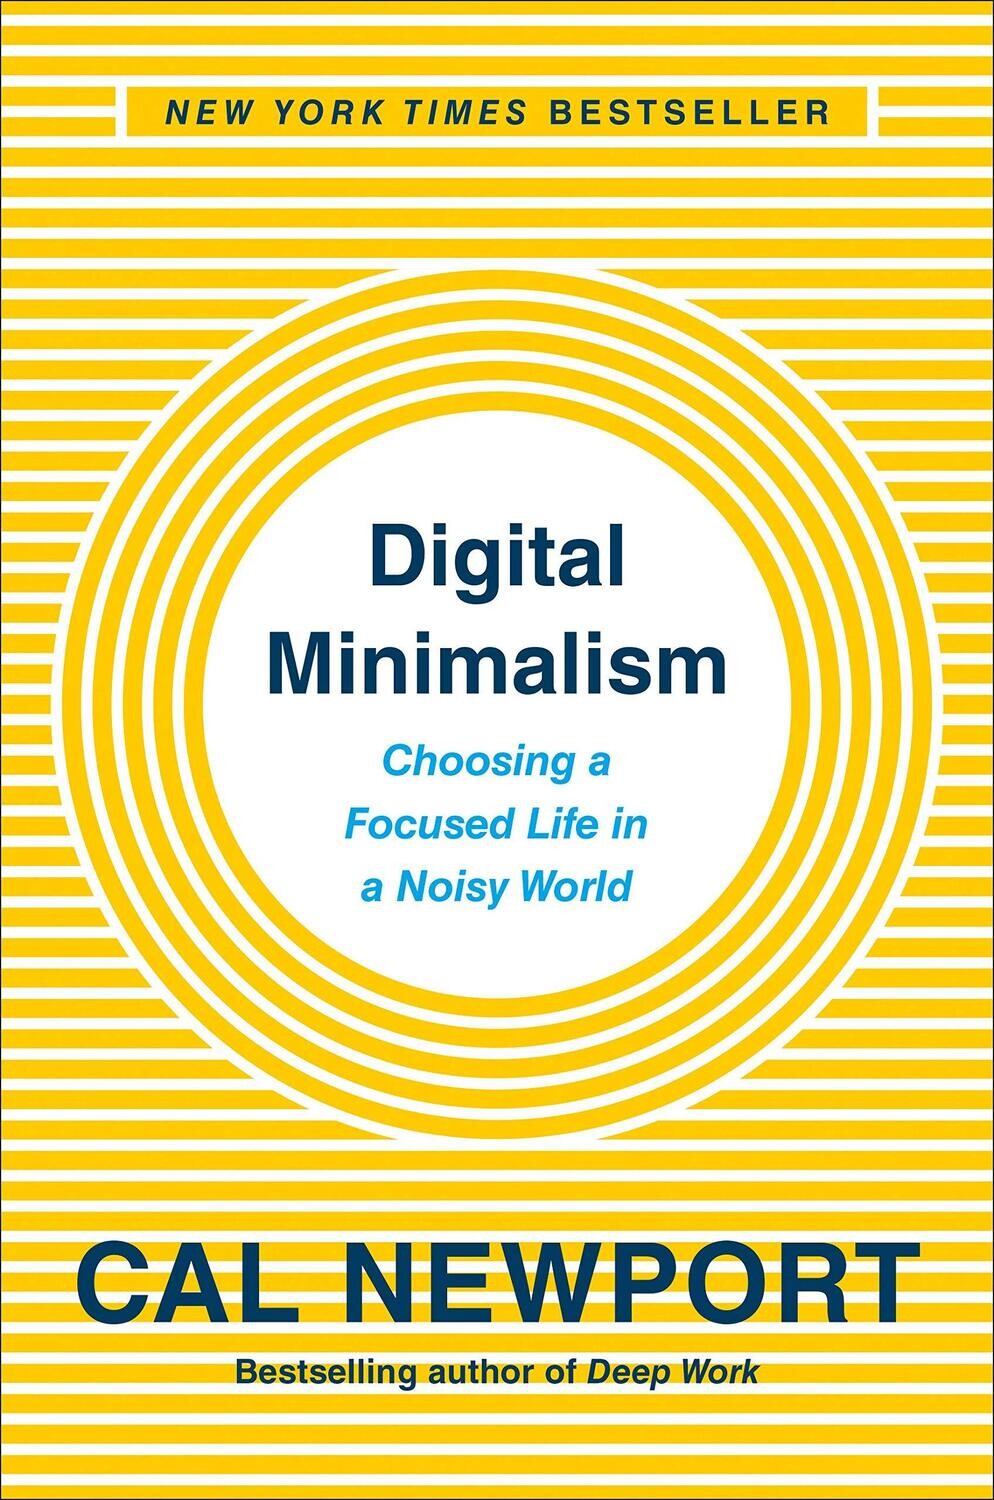 Digital Minimalism: Choosing a Focused Life in a Noisy World (Hardcover, USED)